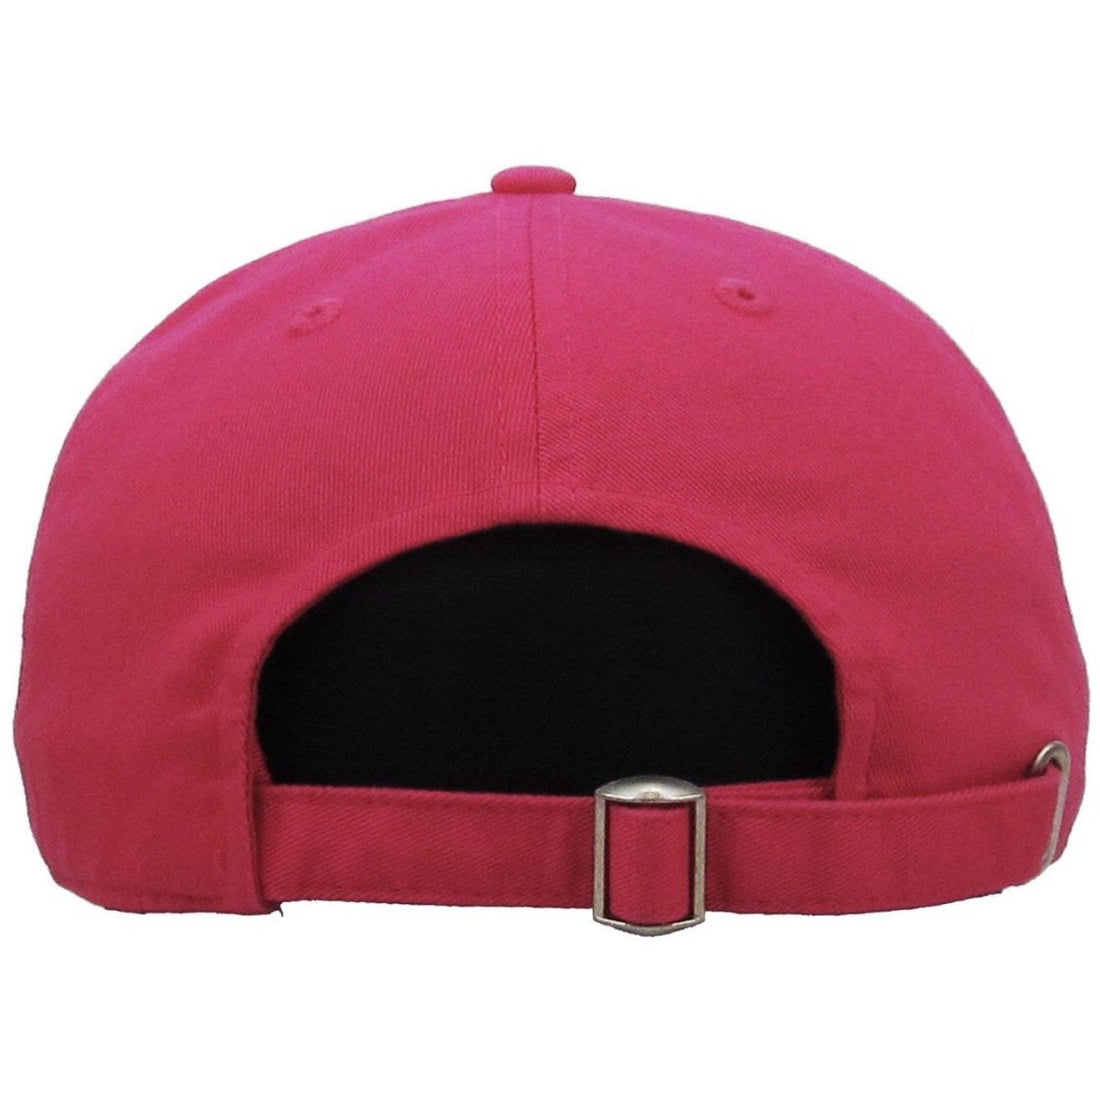 STEM Classic Sports Cap (Hot Pink) - STEM Clothing Group